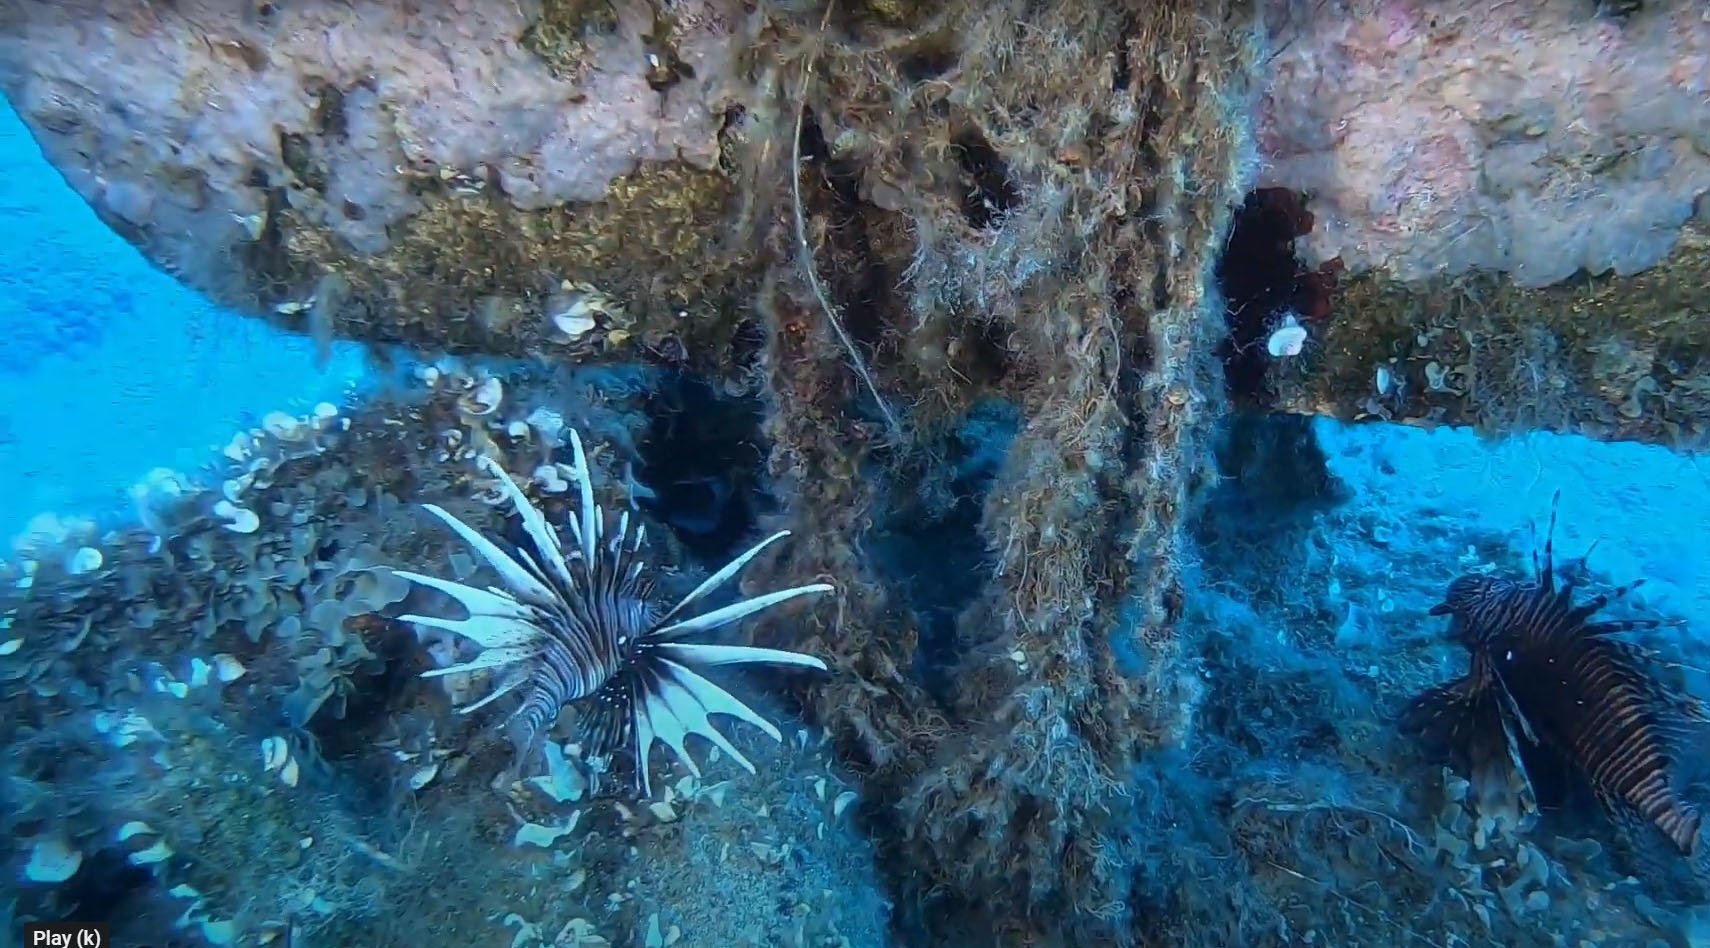 Larnaca shows off its underwater treasures in new video